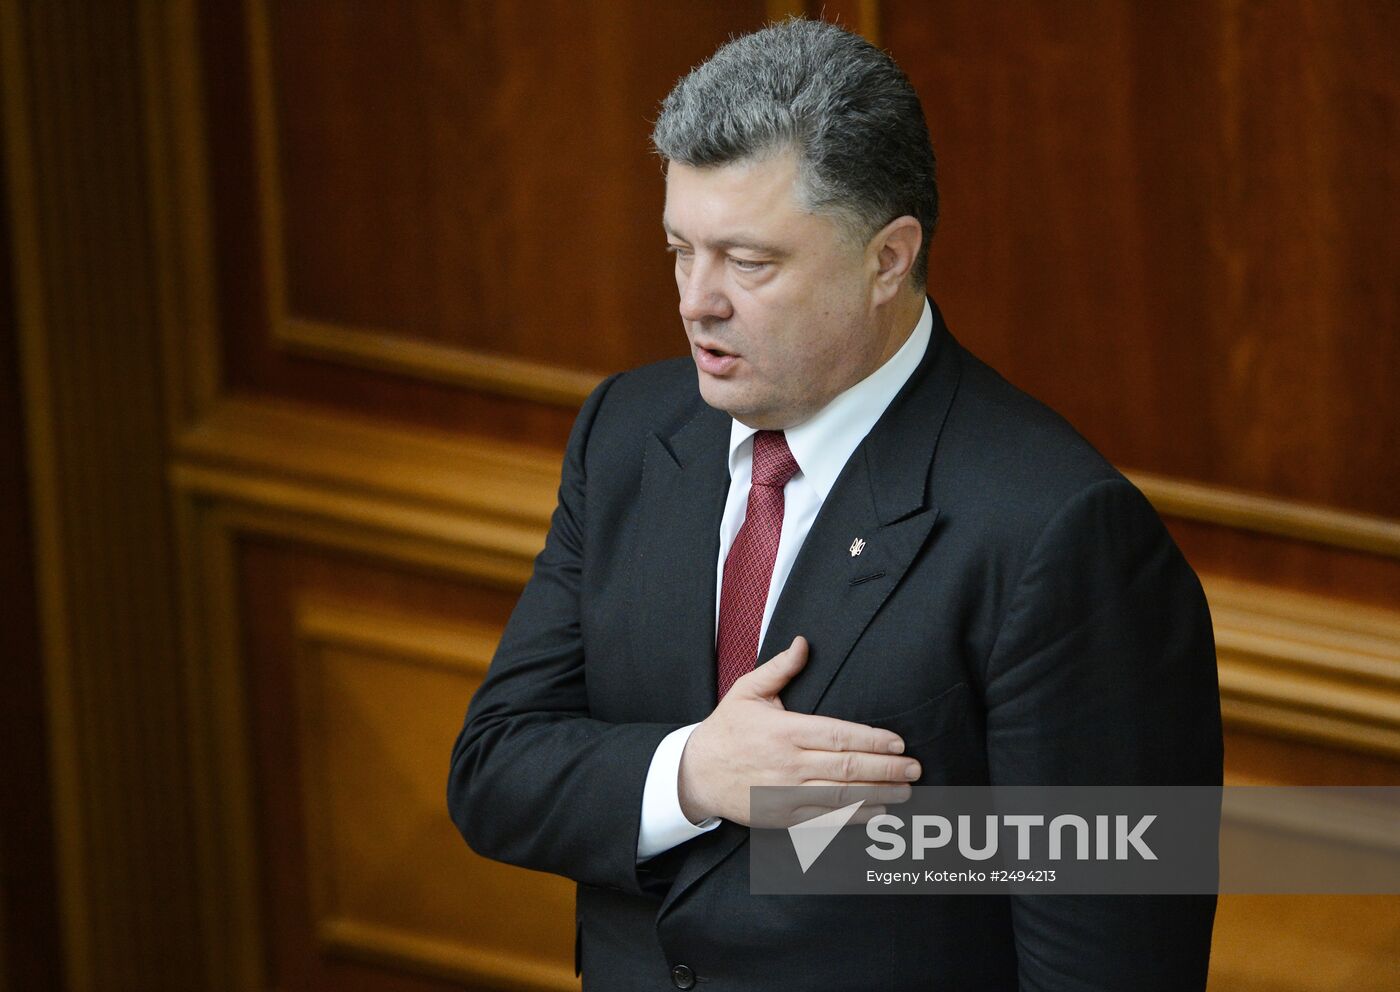 Ukraine's Supreme Rada (Parliament) in session